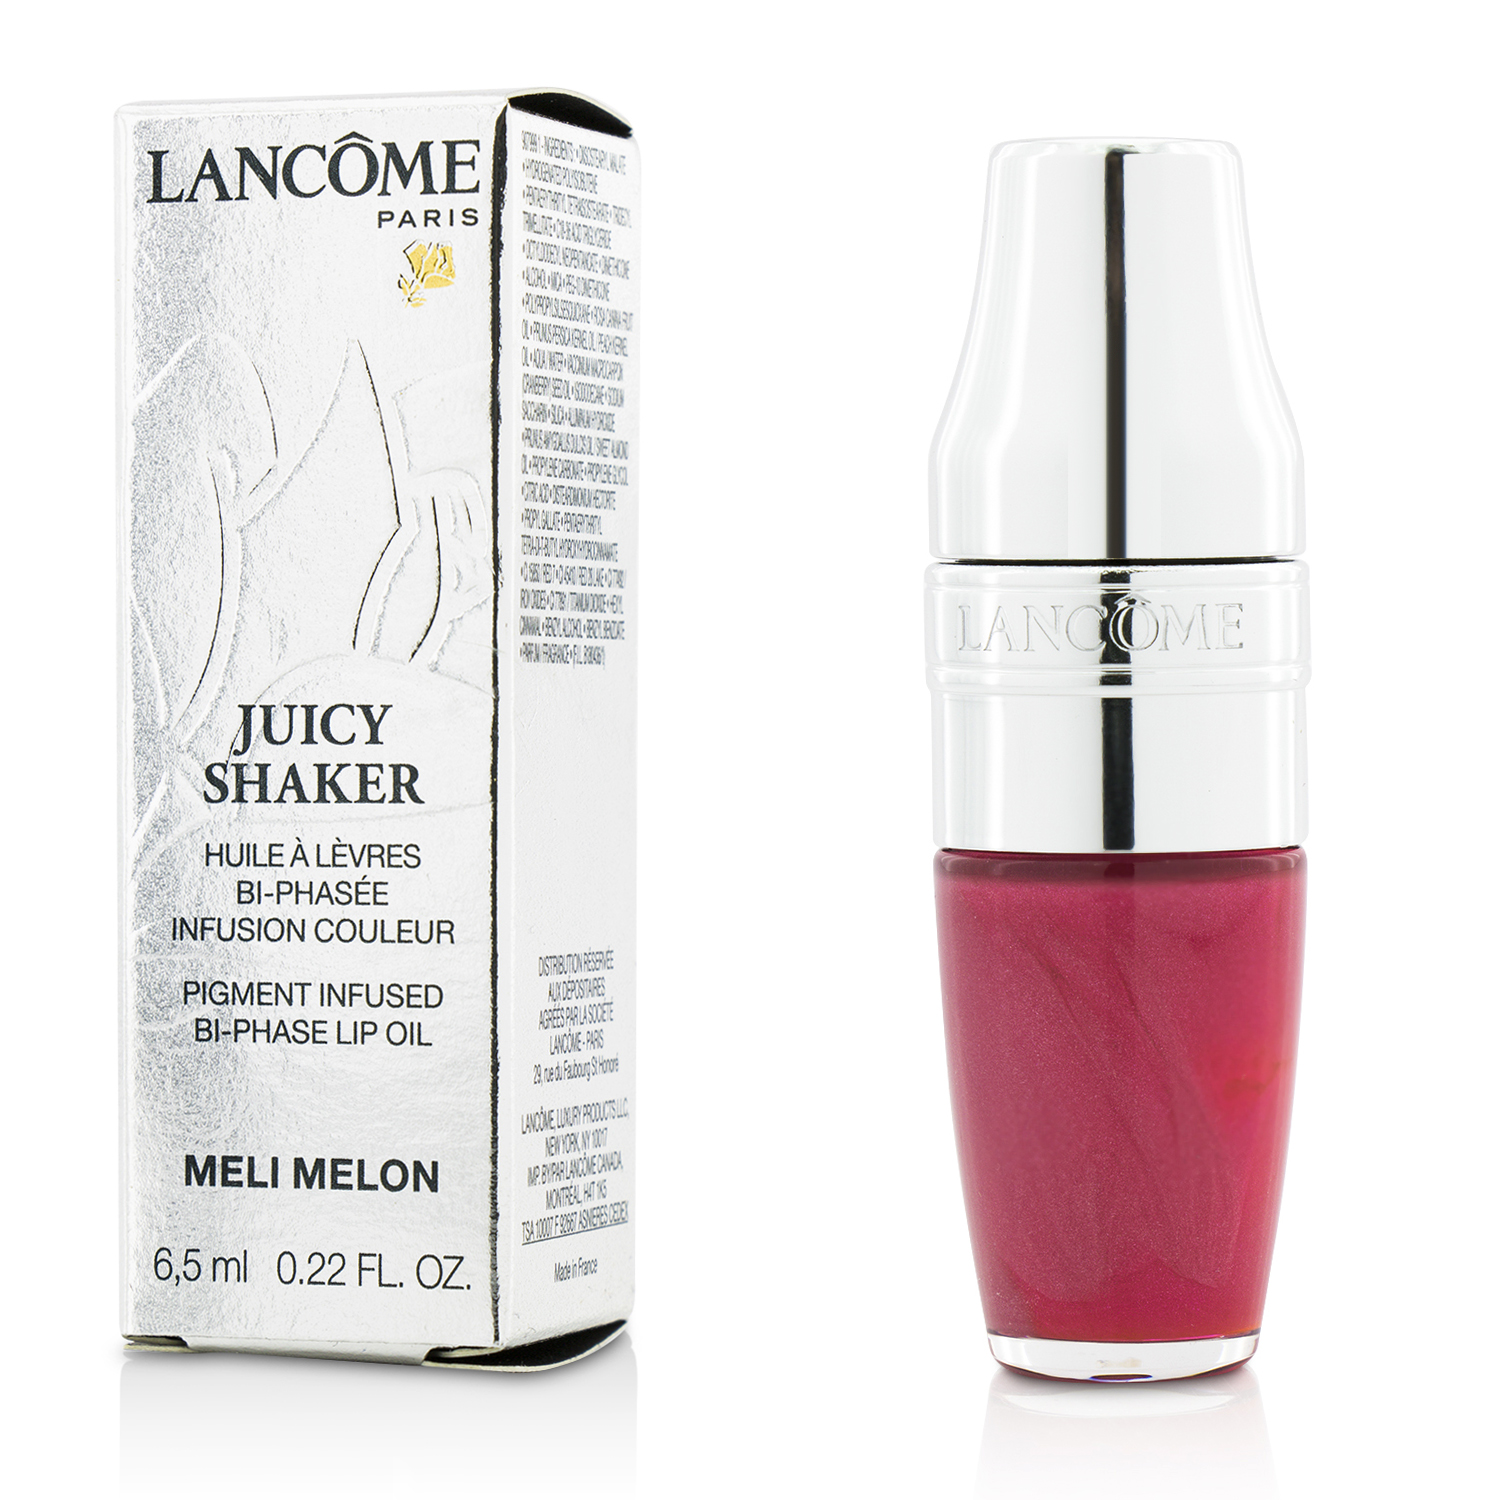 Juicy Shaker Pigment Infused Bi Phase Lip Oil - #301 Meli Melon Lancome Image